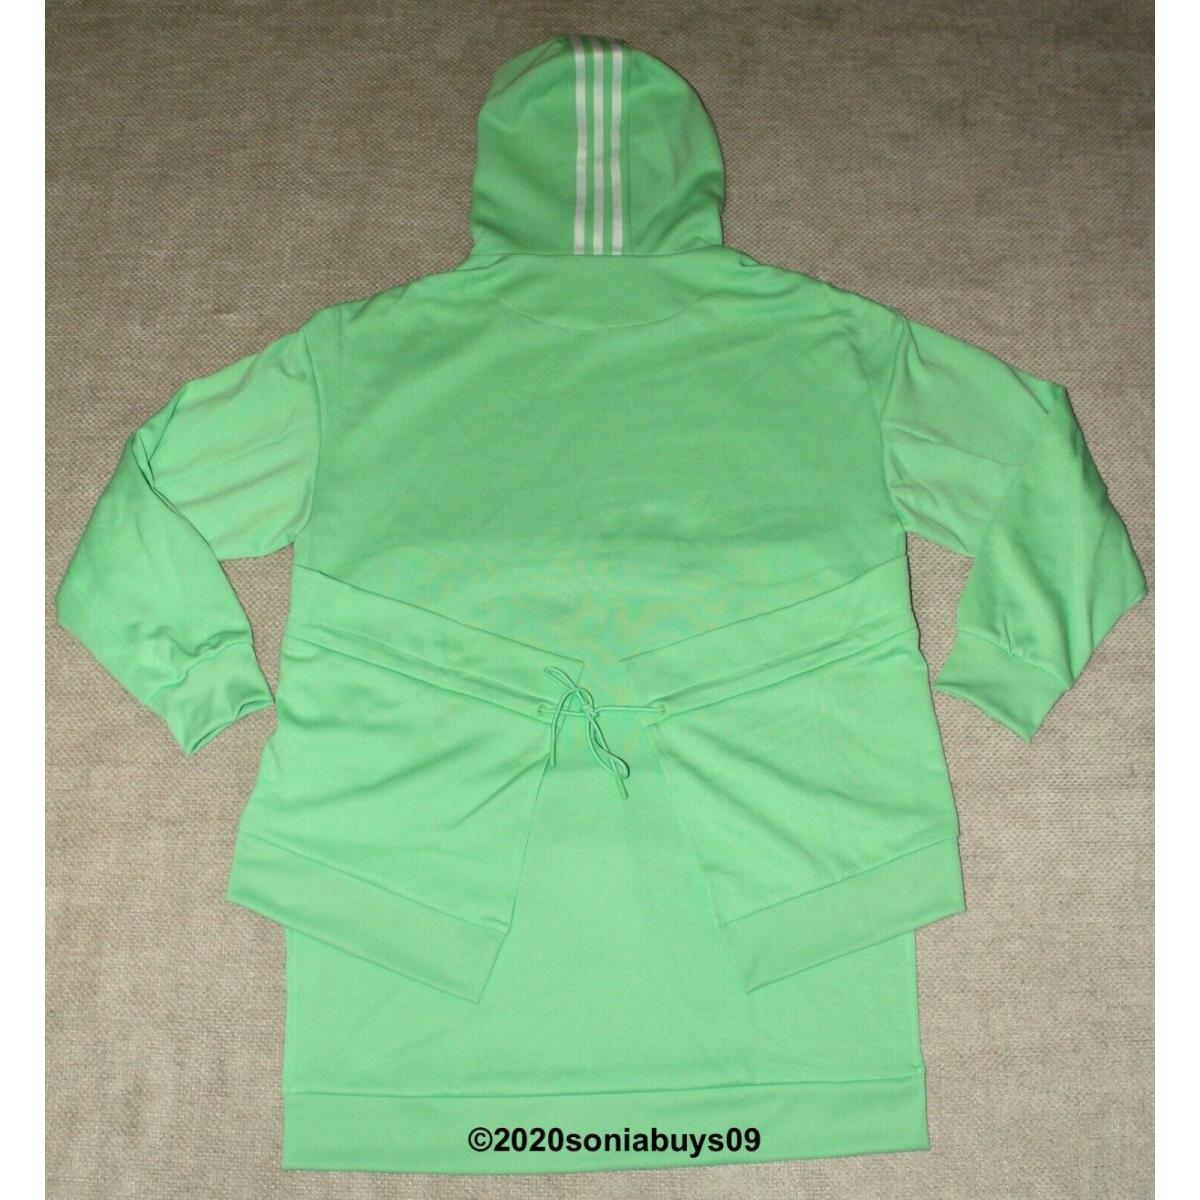 Adidas clothing  - Glow Mint Green 3